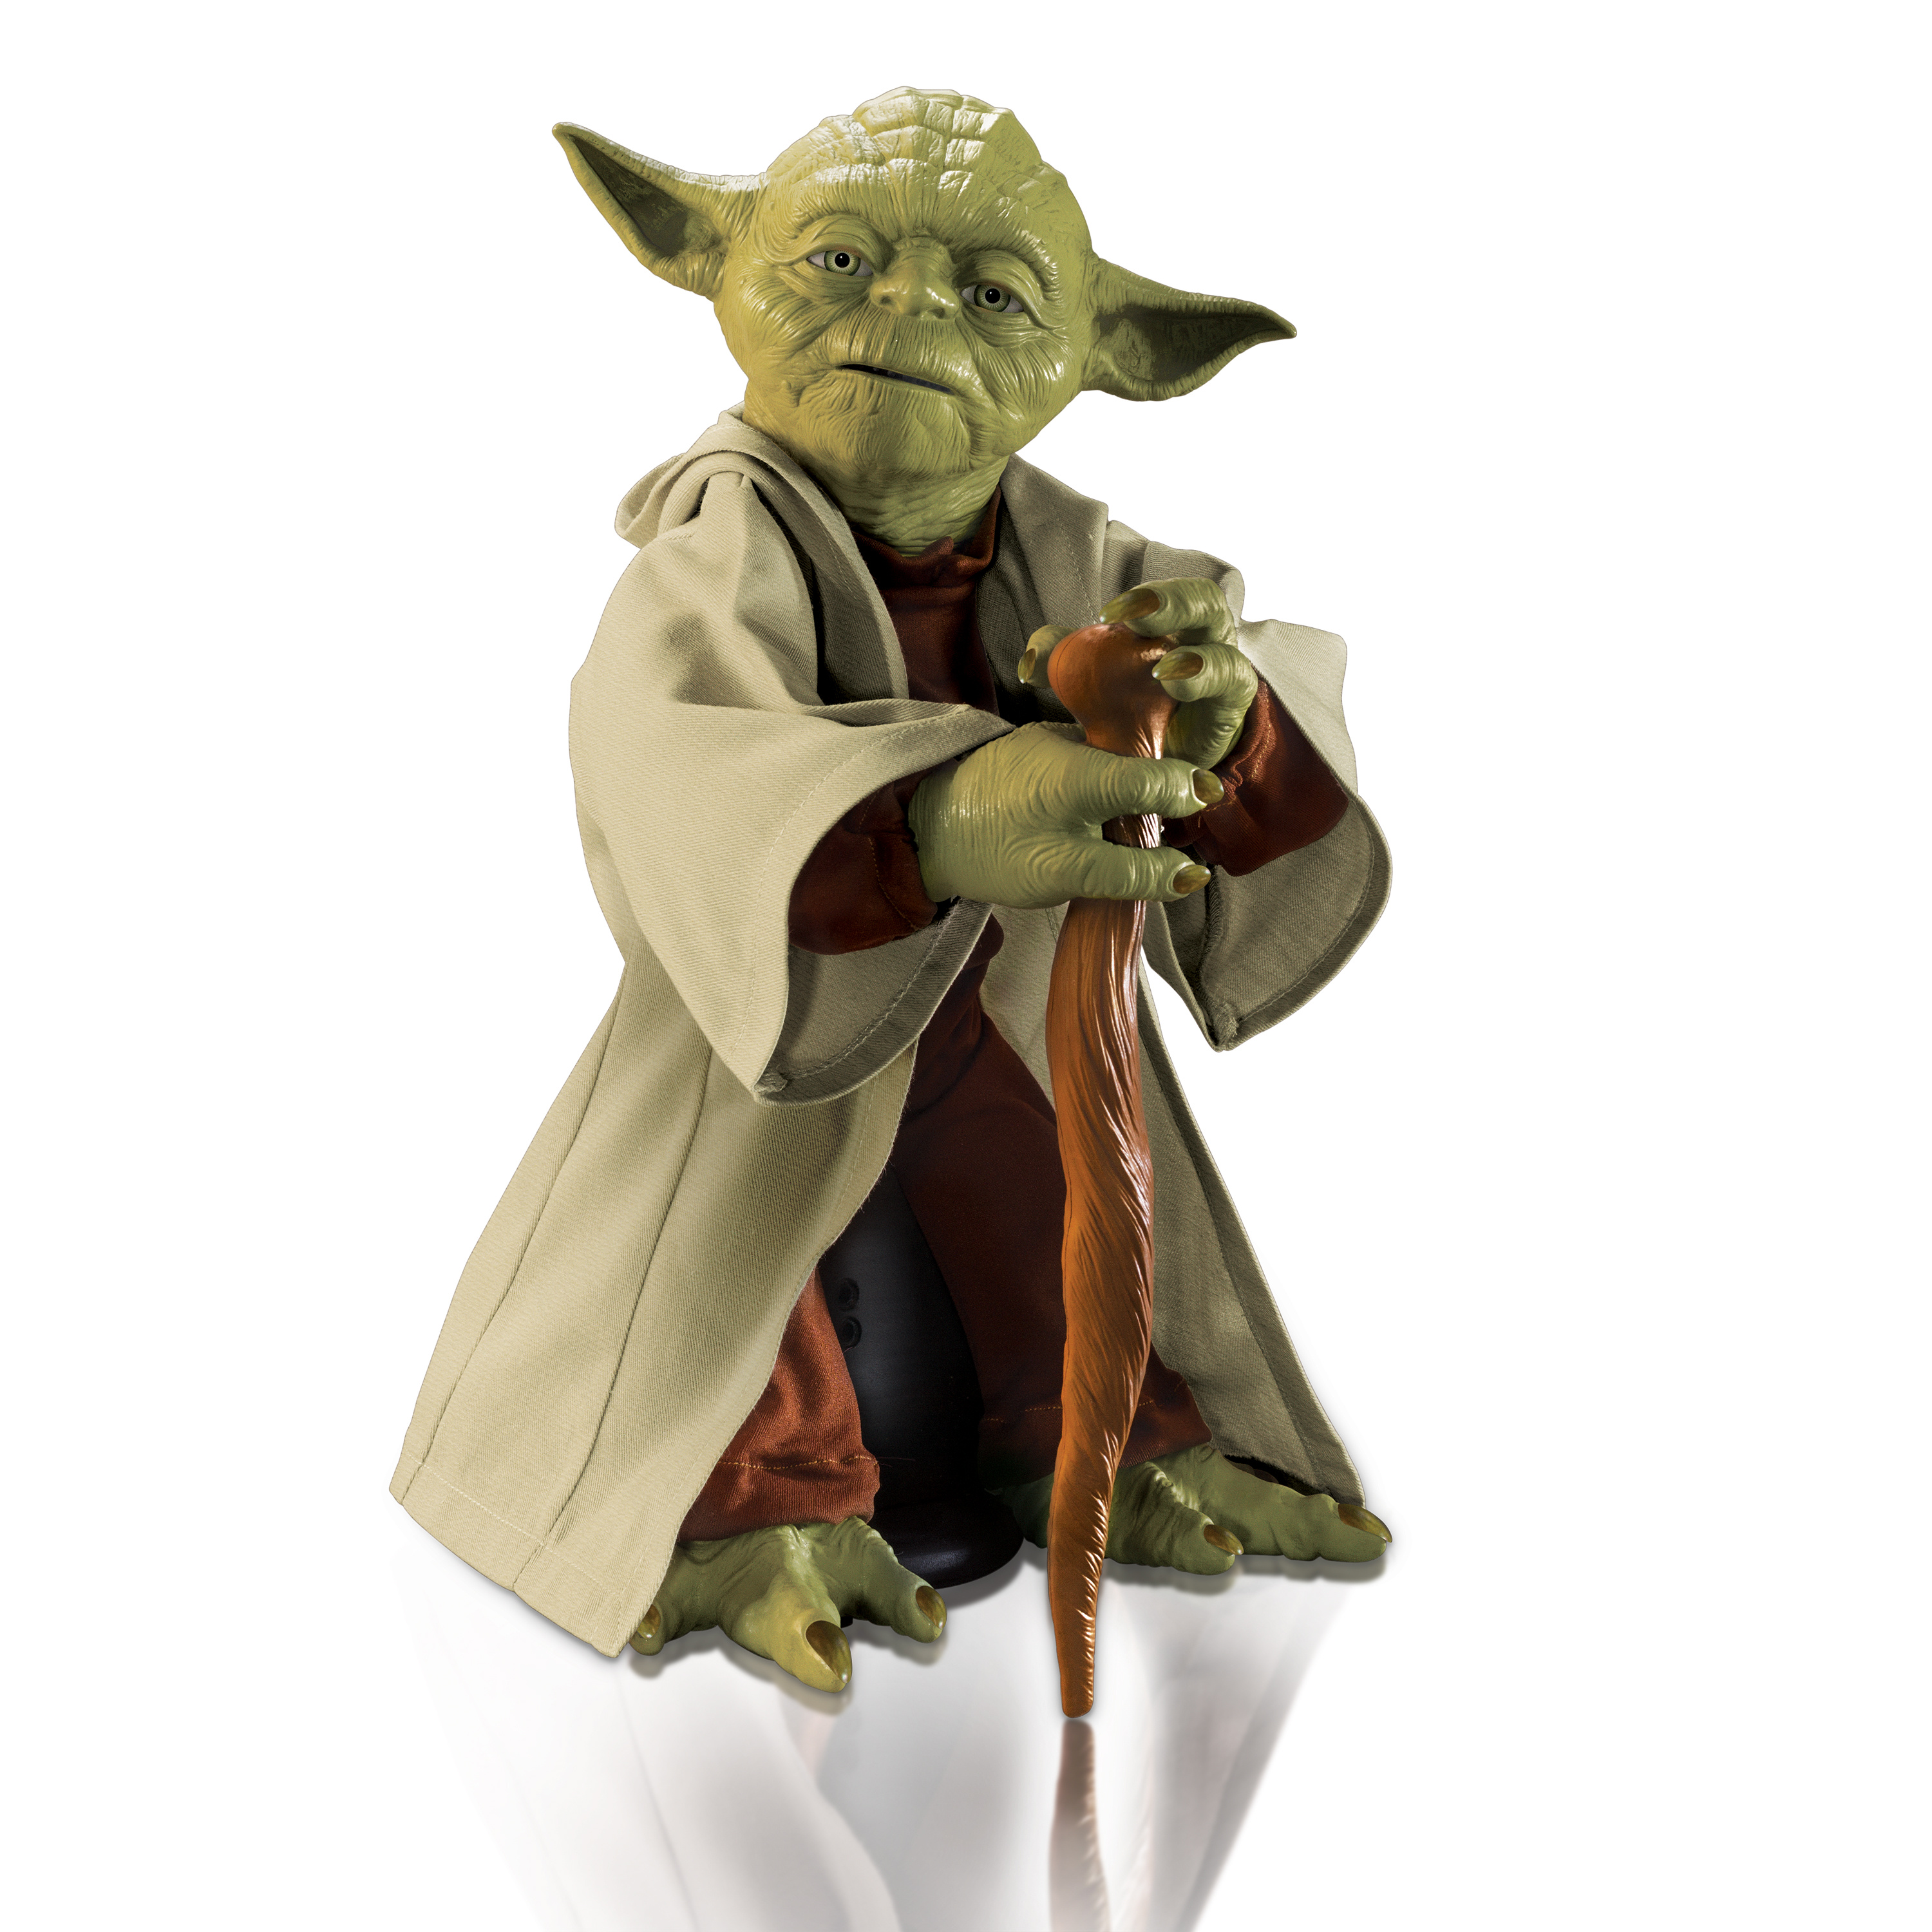 Star Wars Legendary Jedi Master Yoda - image 5 of 6